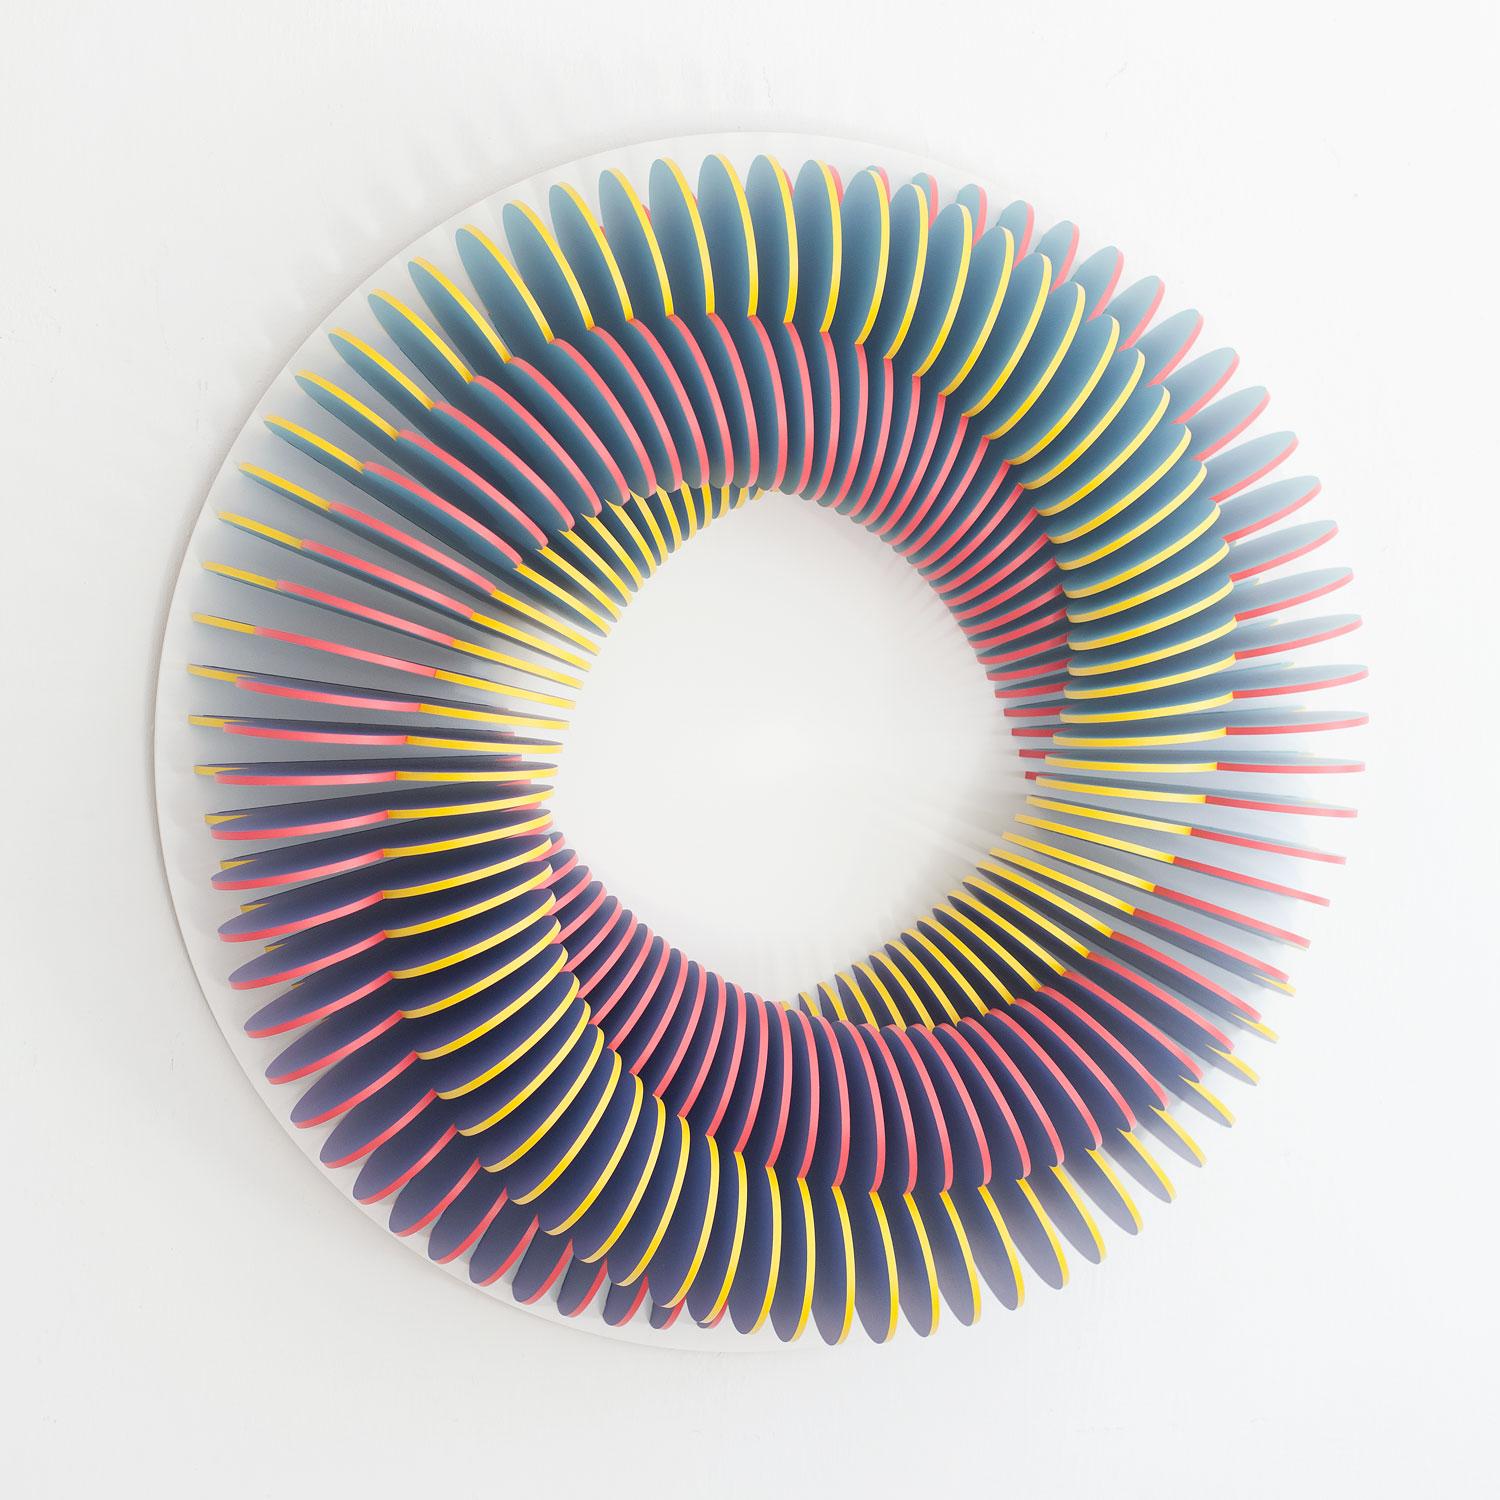 CC 103 - Pink yellow blue abstract geometric 3D wall circular sculpture - Abstract Geometric Sculpture by Anna Kruhelska